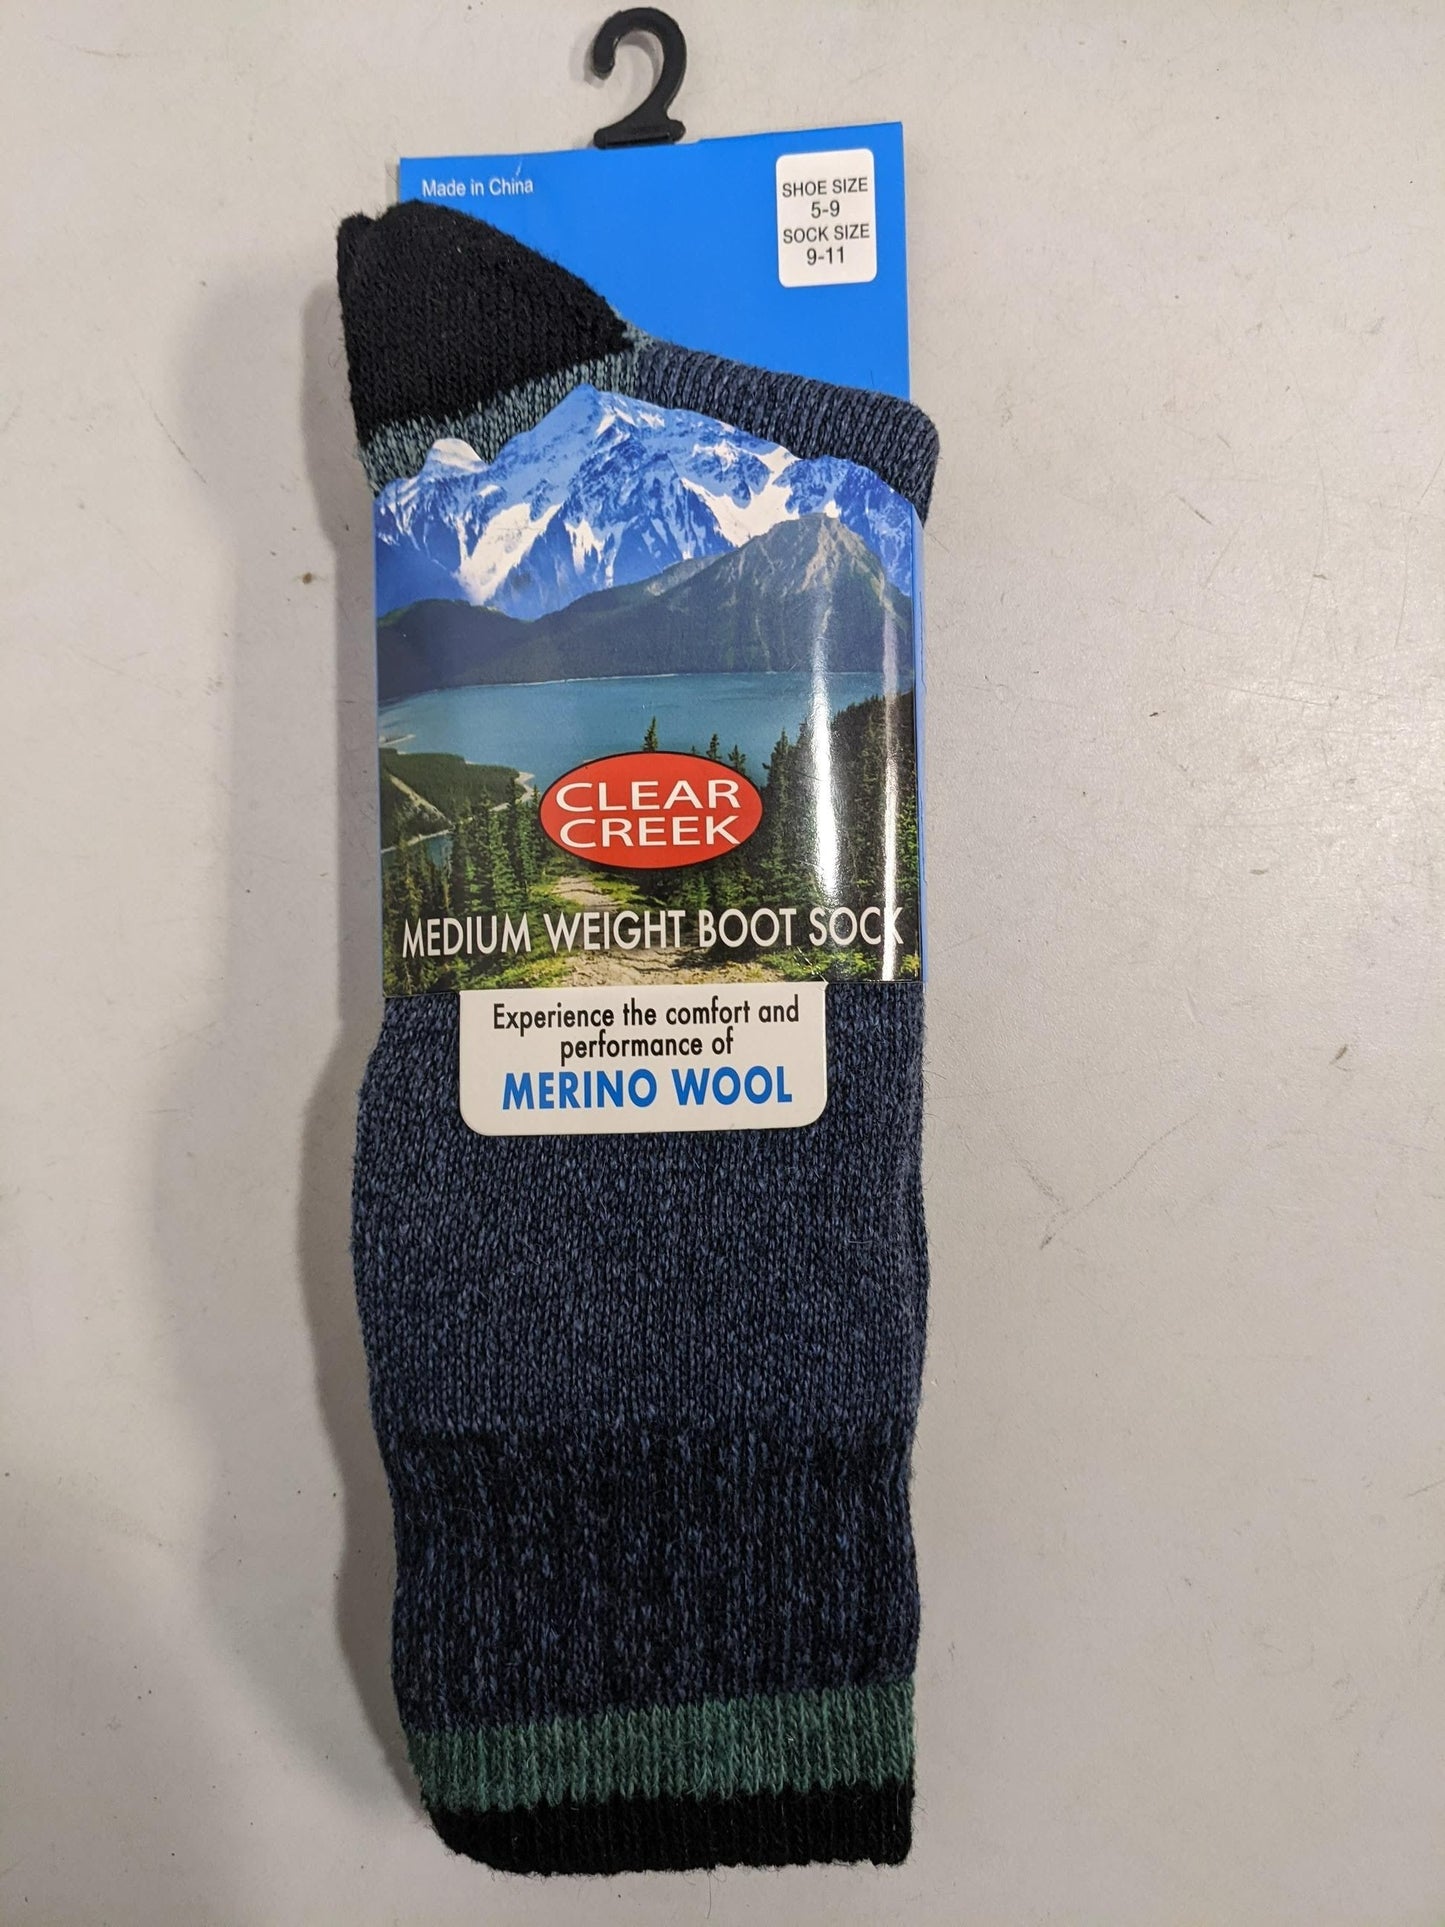 Clear Creek Merino Wool Socks Shoe size 5-9 Assorted Colors NEW